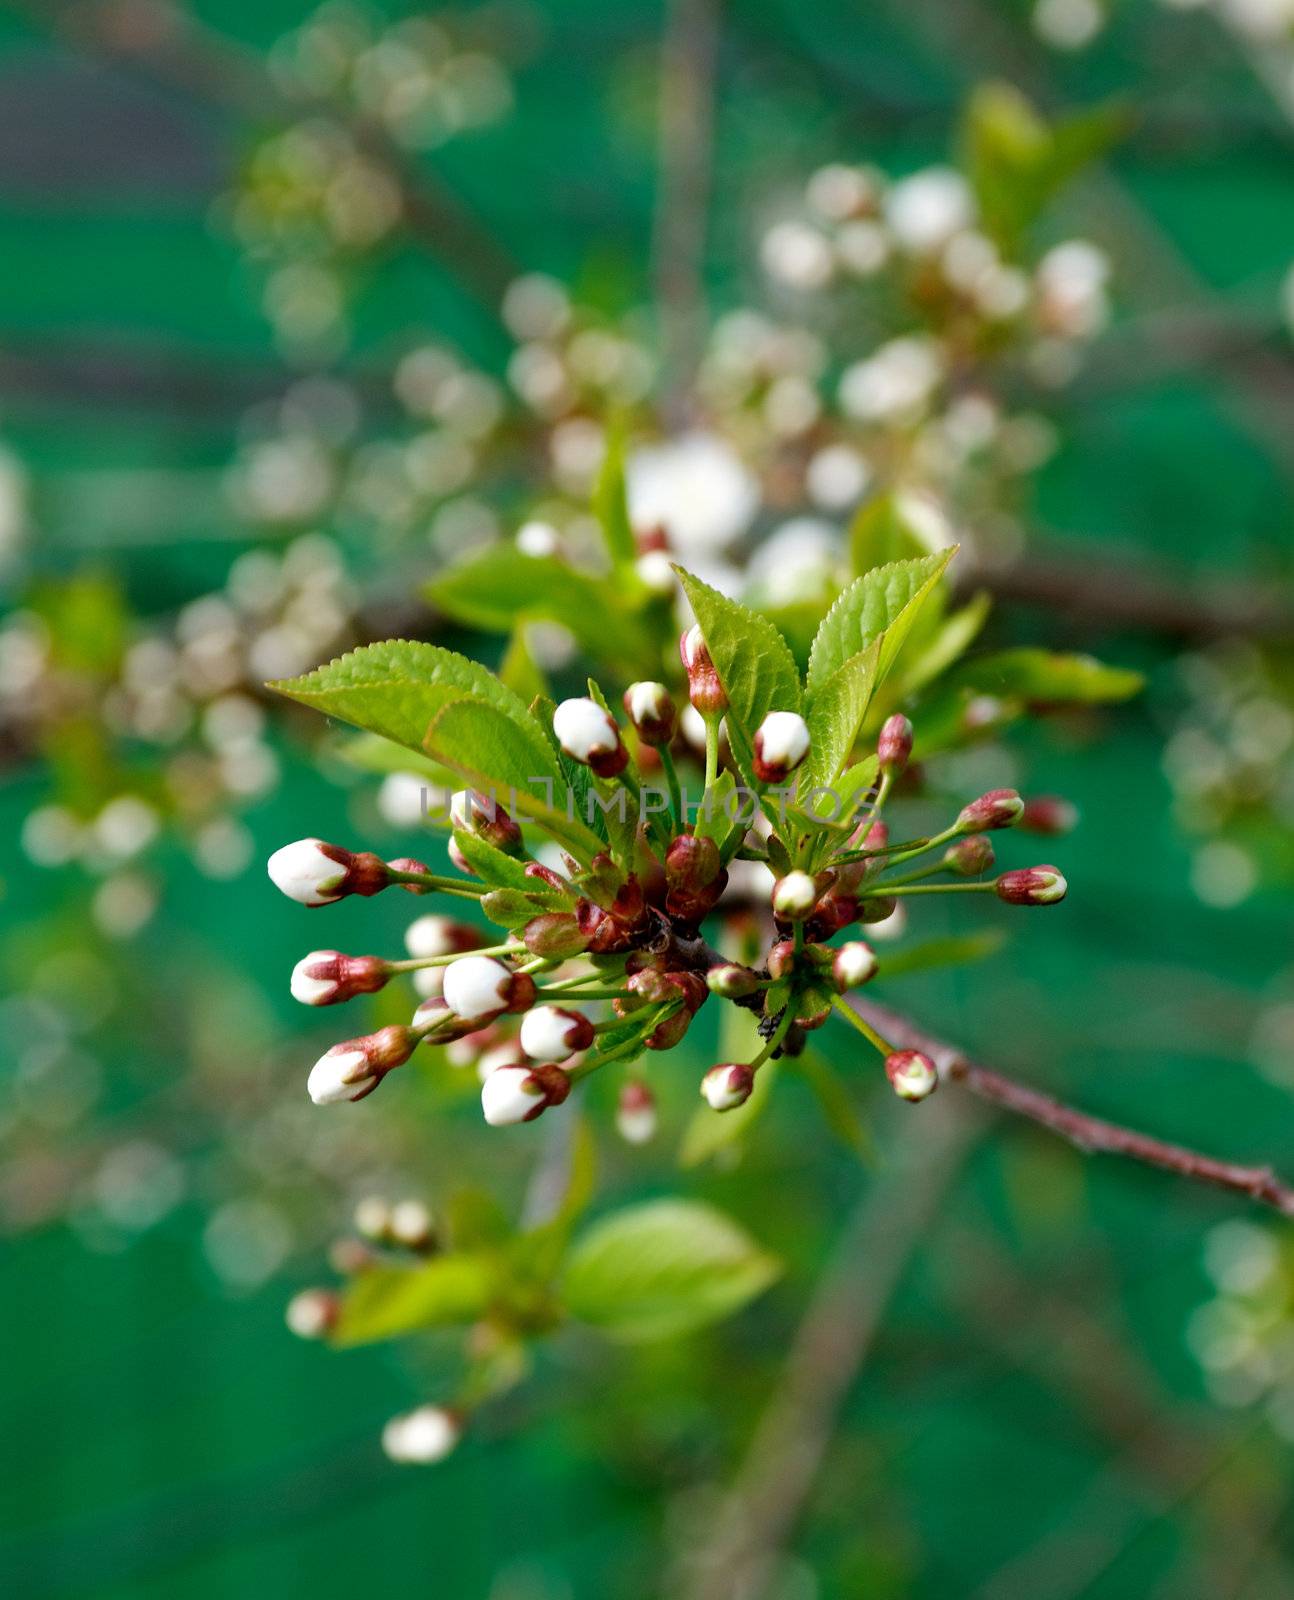 Flower-bud of cherry tree by zhekos